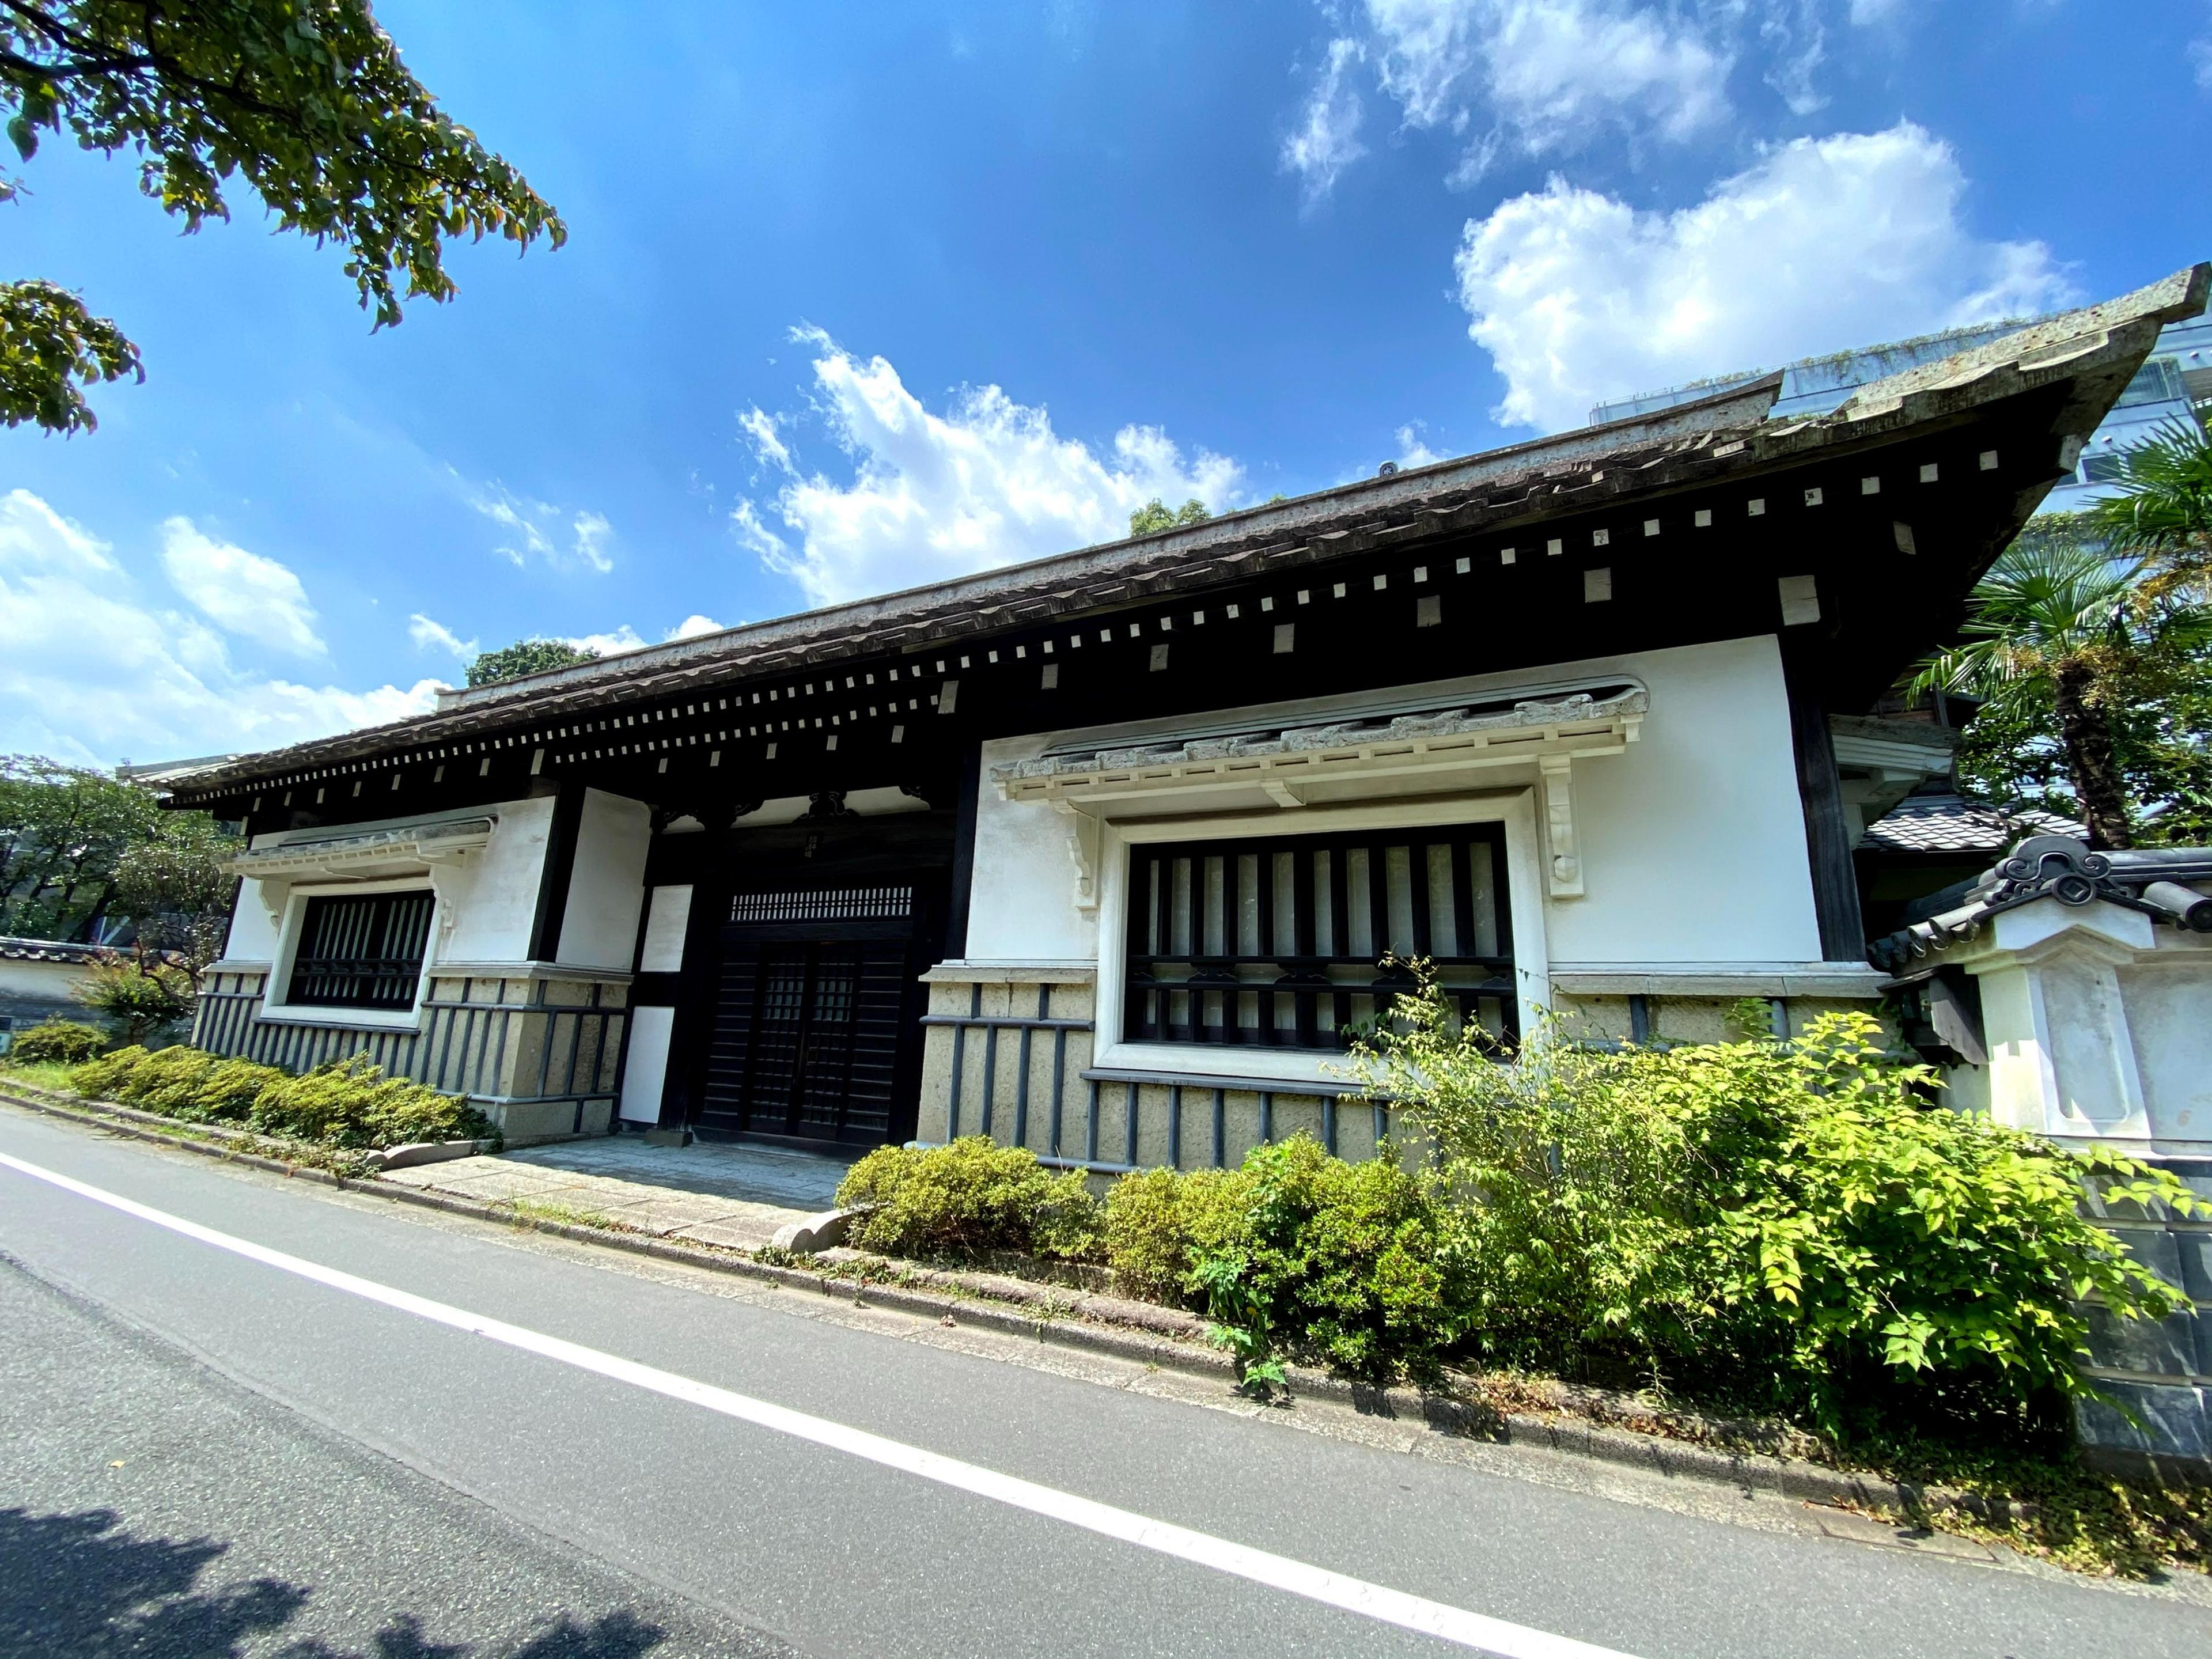 The Japan Folk Crafts Museum West Hall